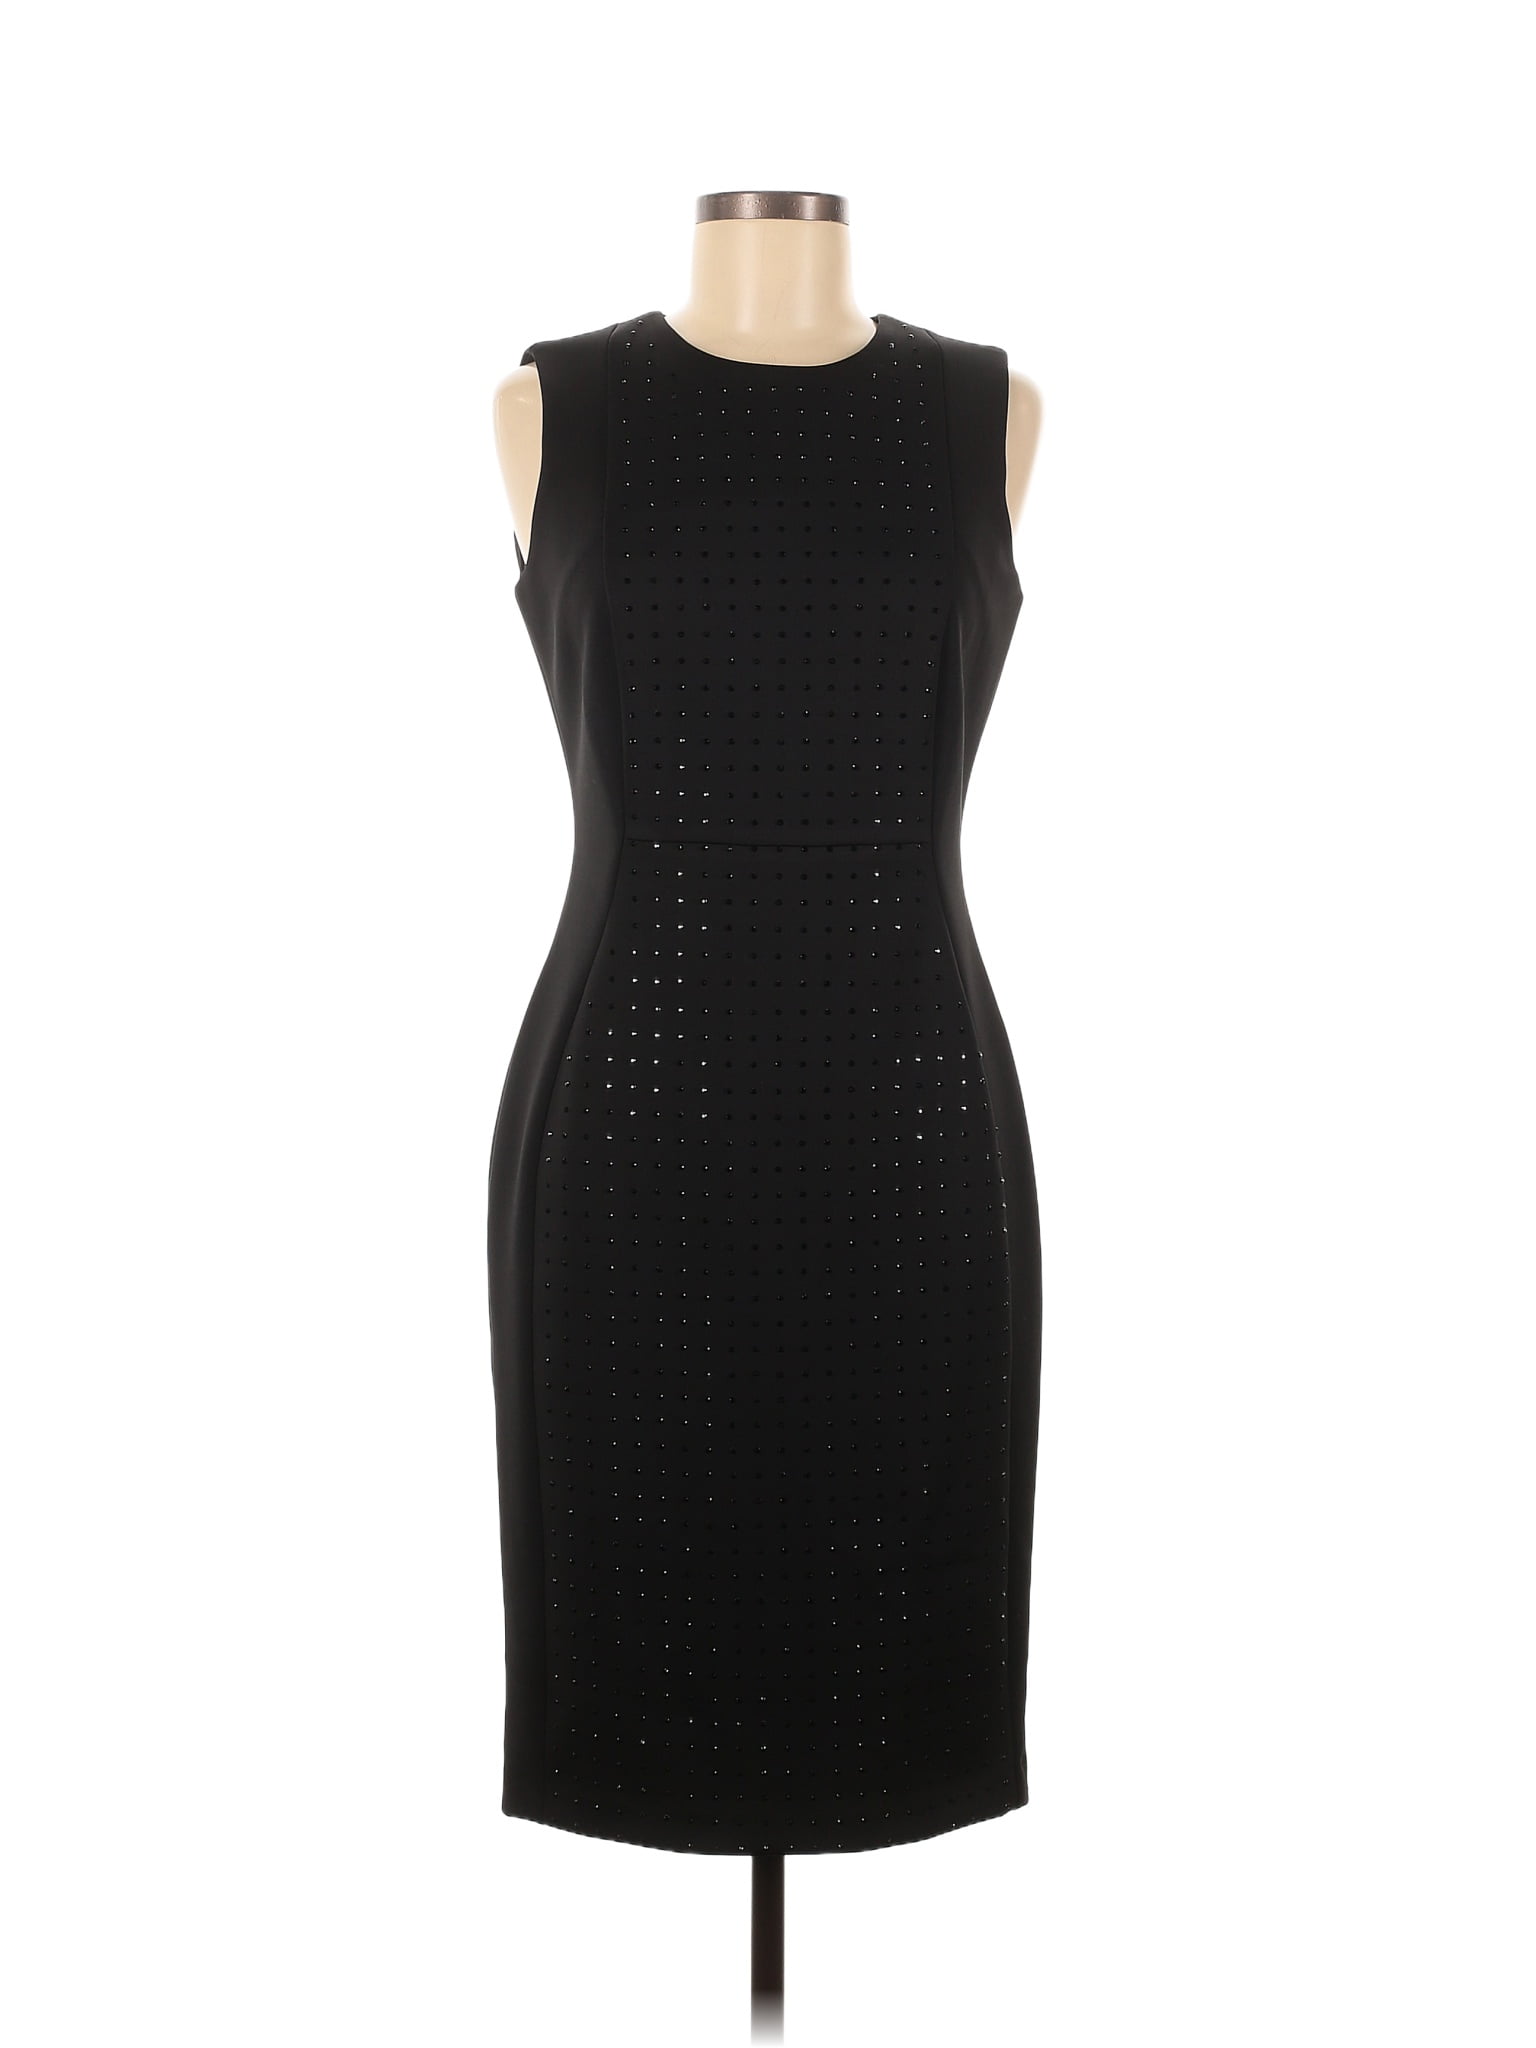 Karl Lagerfeld Paris Solid Black Casual Dress Size 6 - 81% off | thredUP